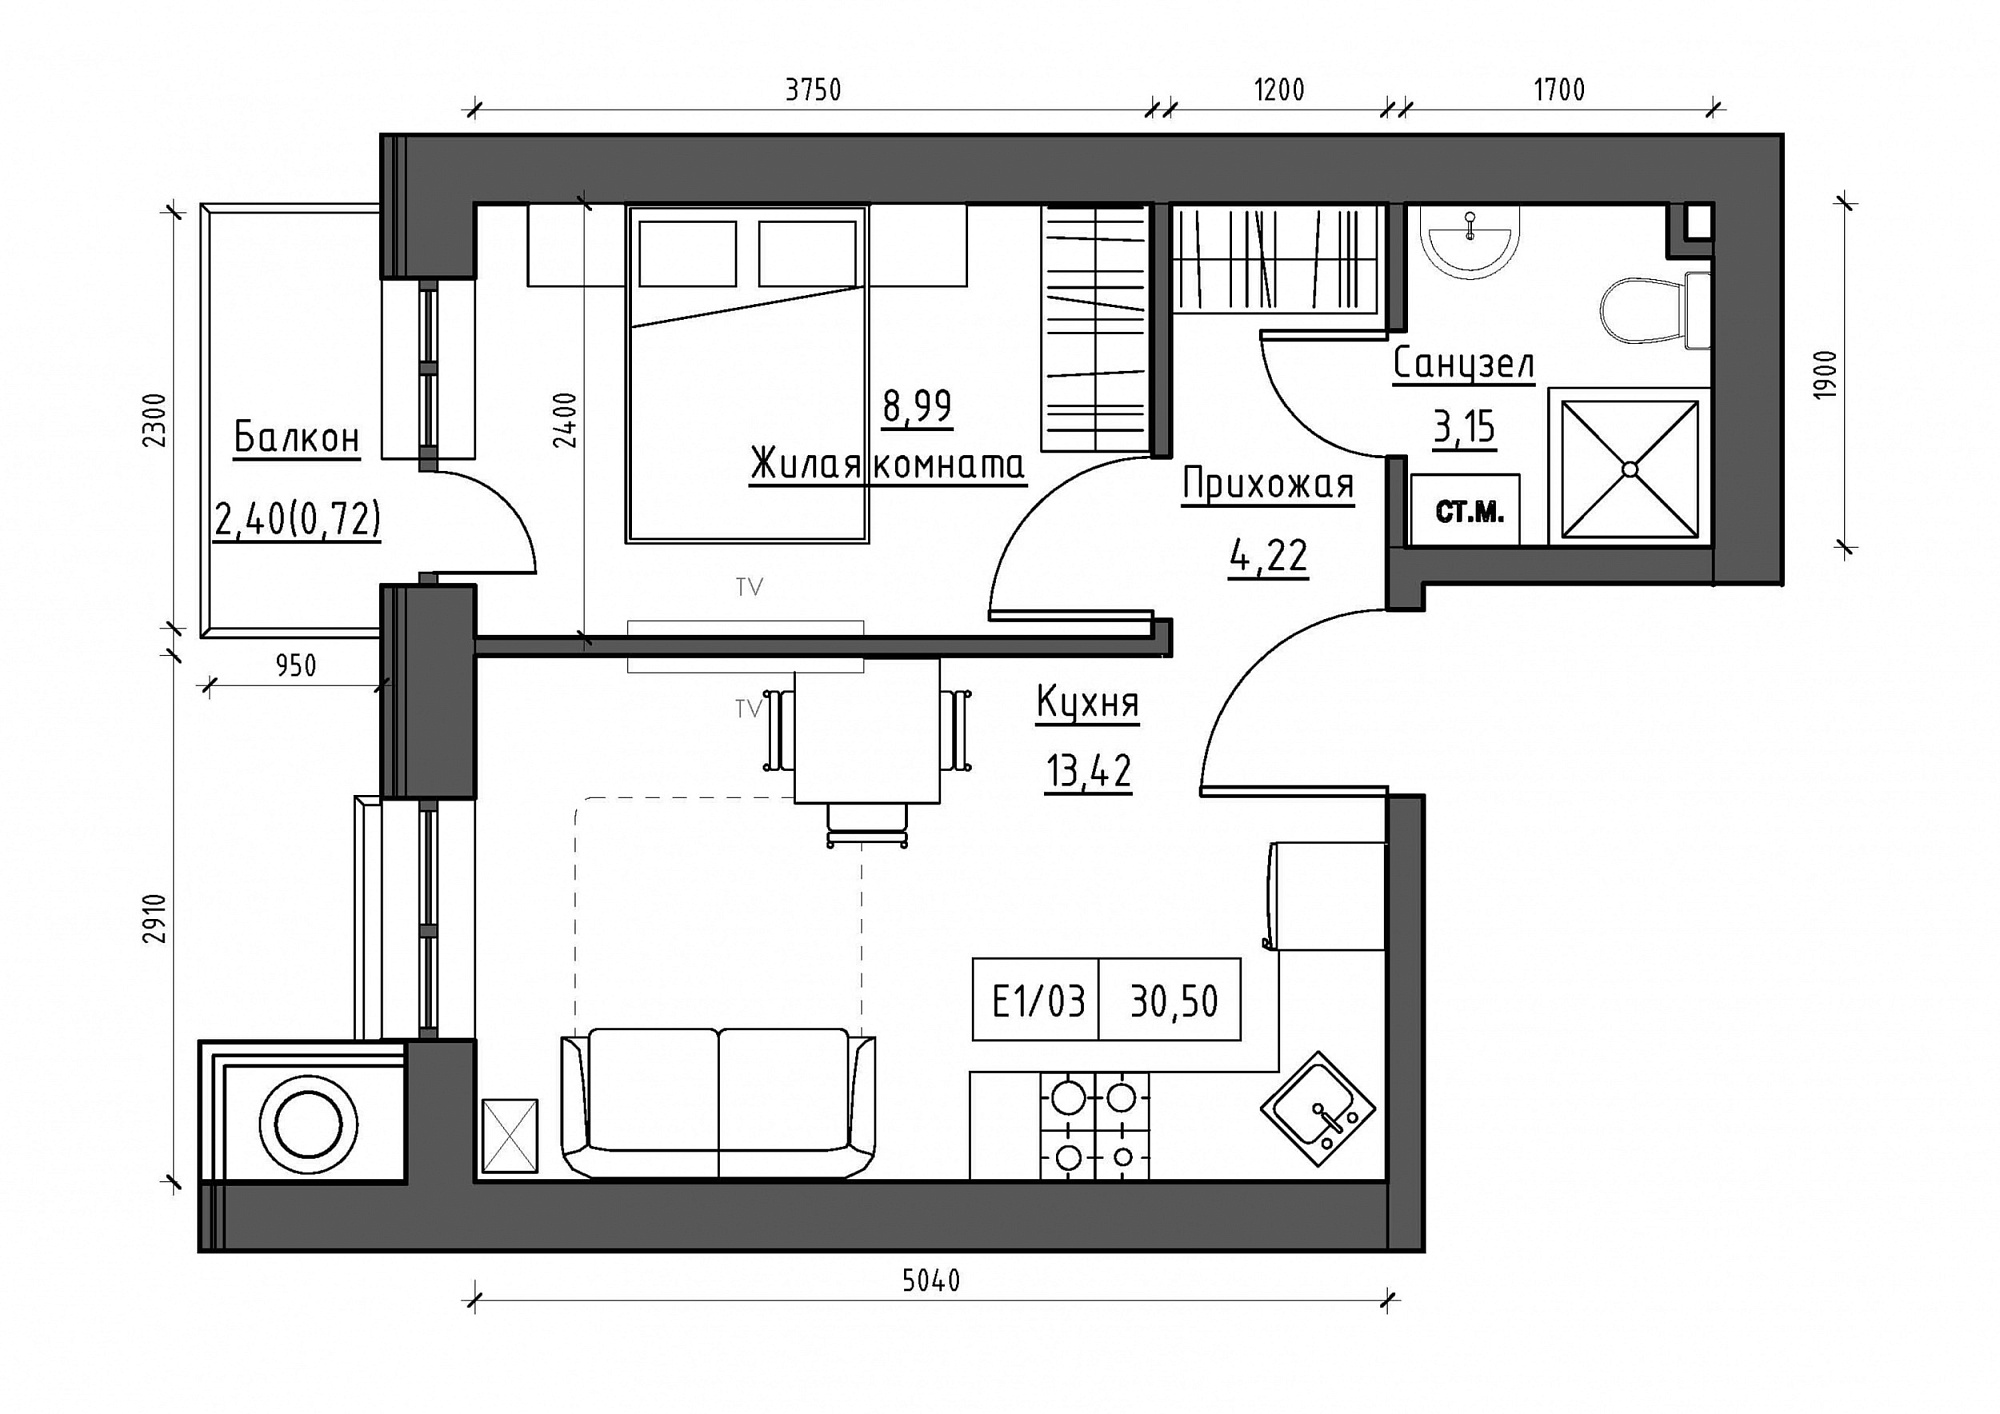 Planning 1-rm flats area 30.5m2, KS-011-03/0003.